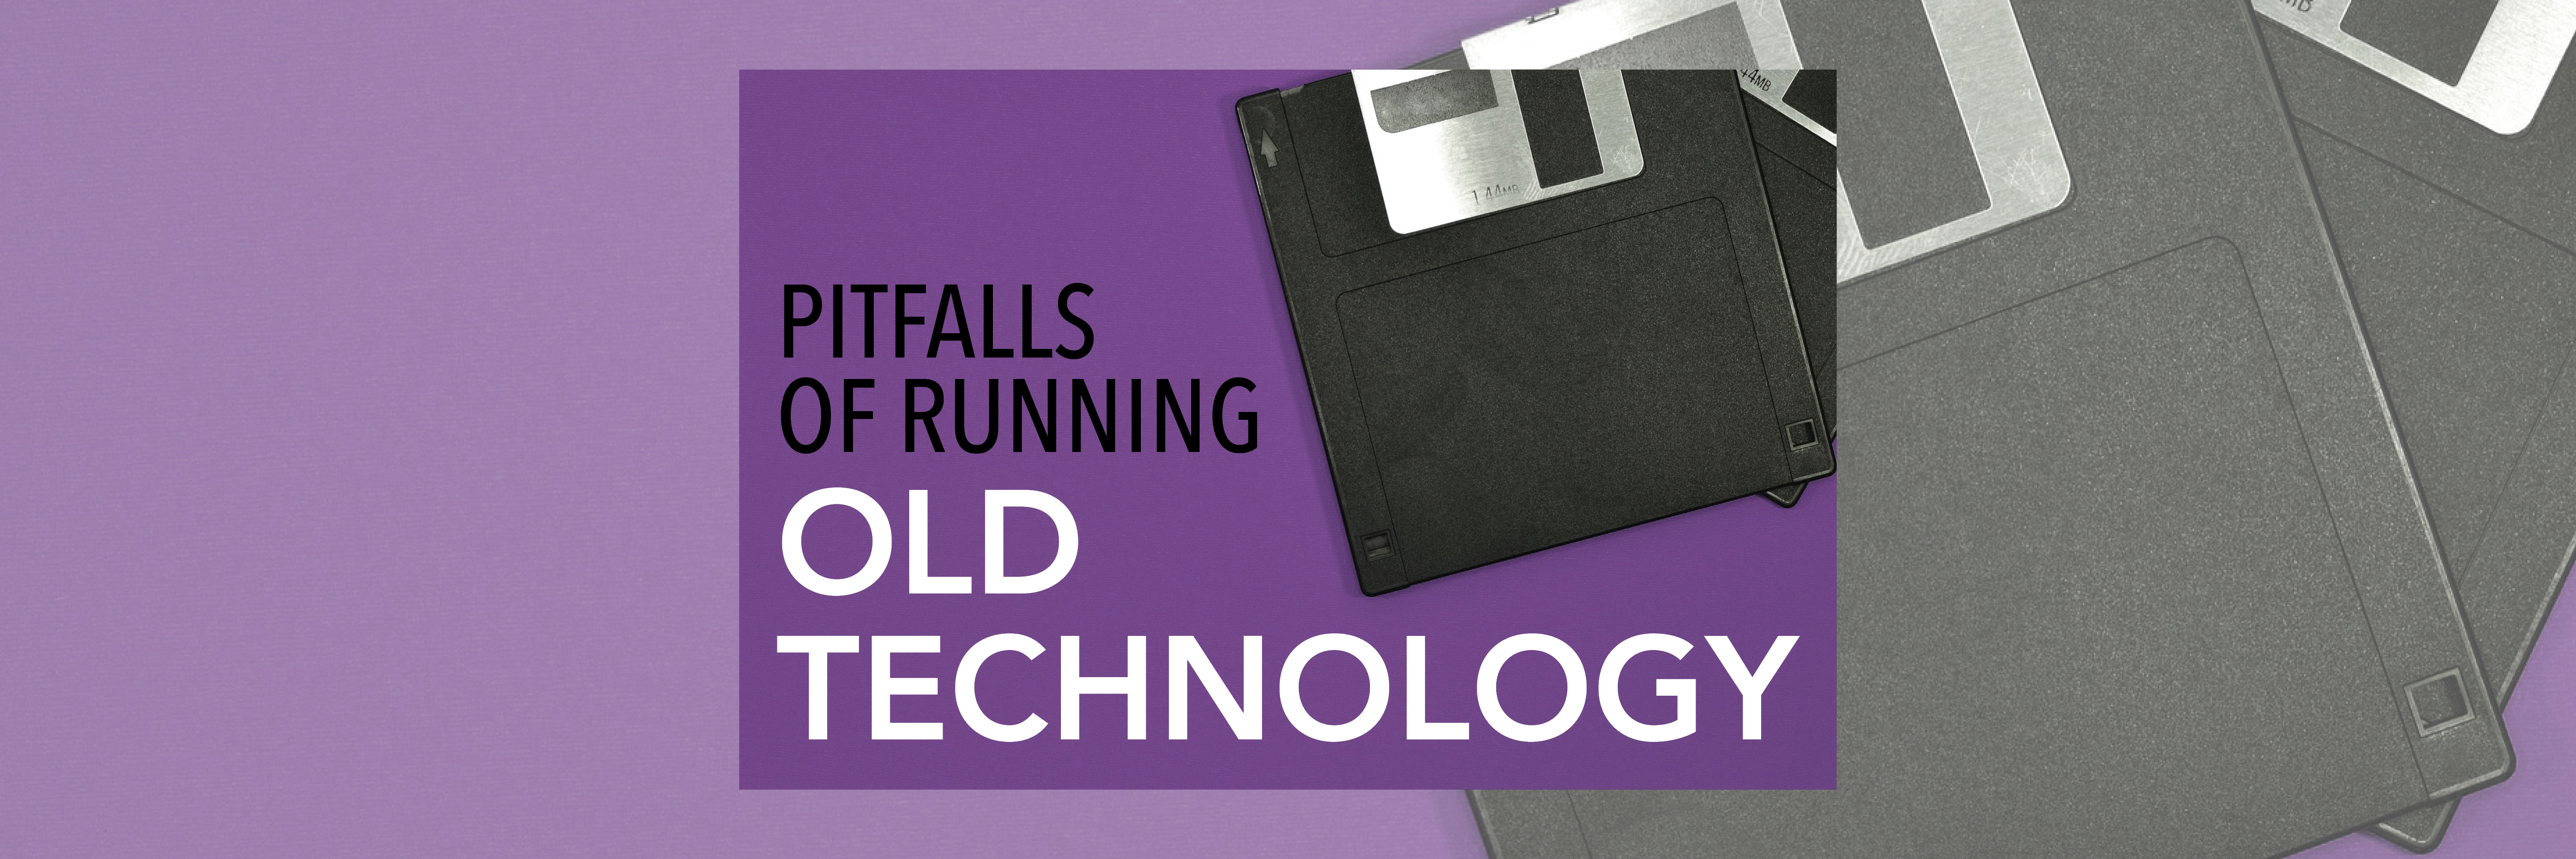 Pitfalls of Running Old Technology